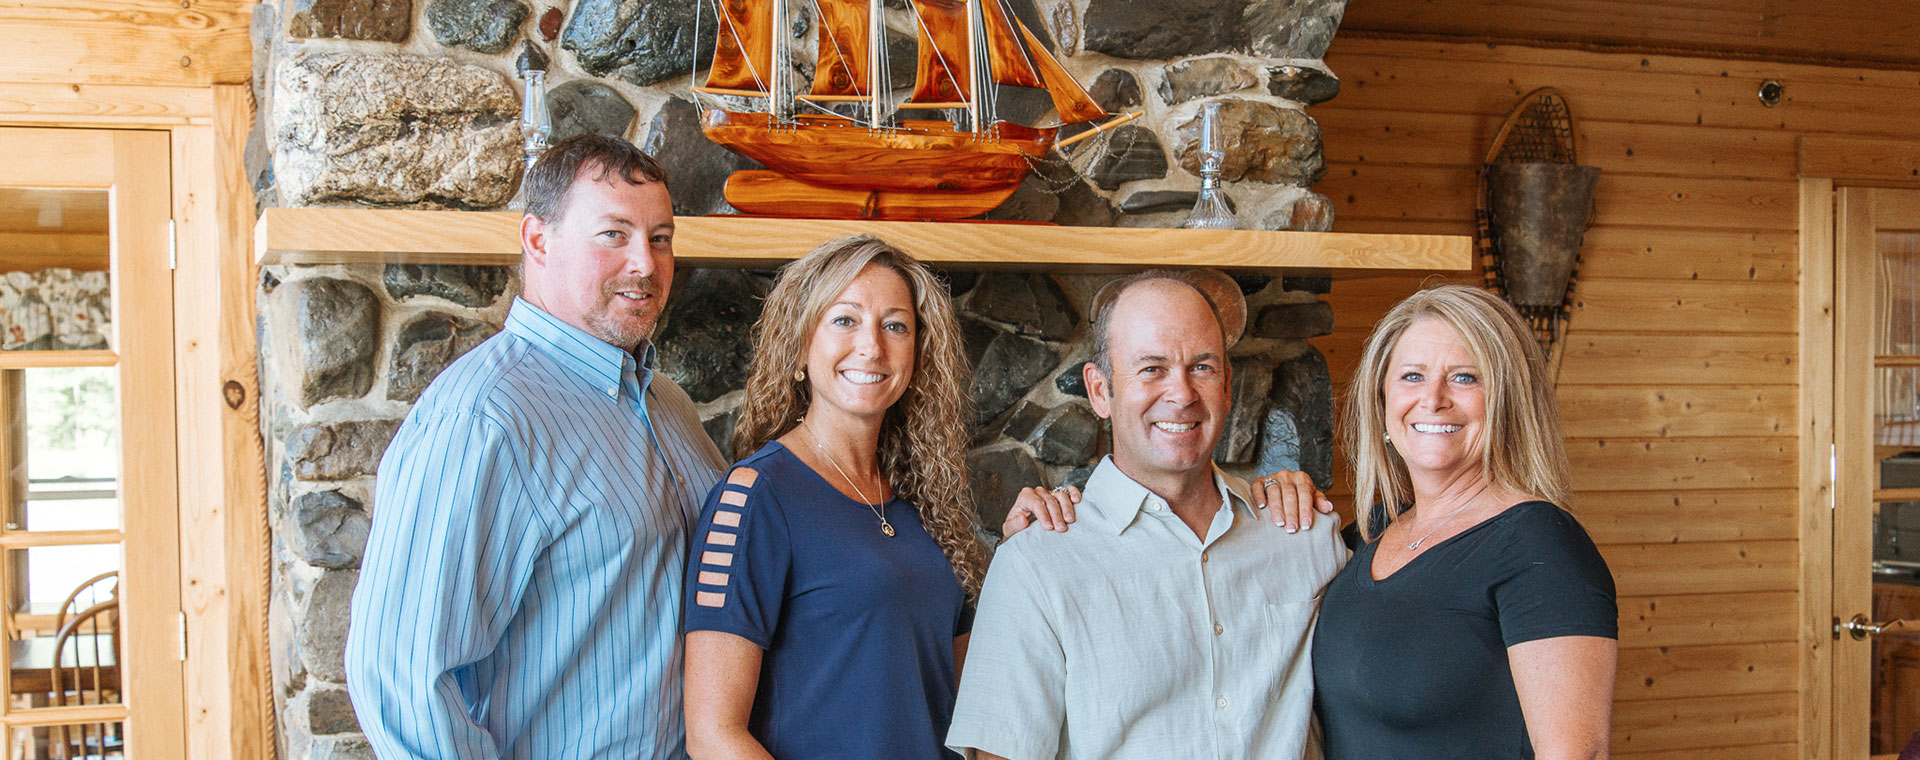 Meet Your Hosts At 5 Lakes Lodge Millinocket Maine